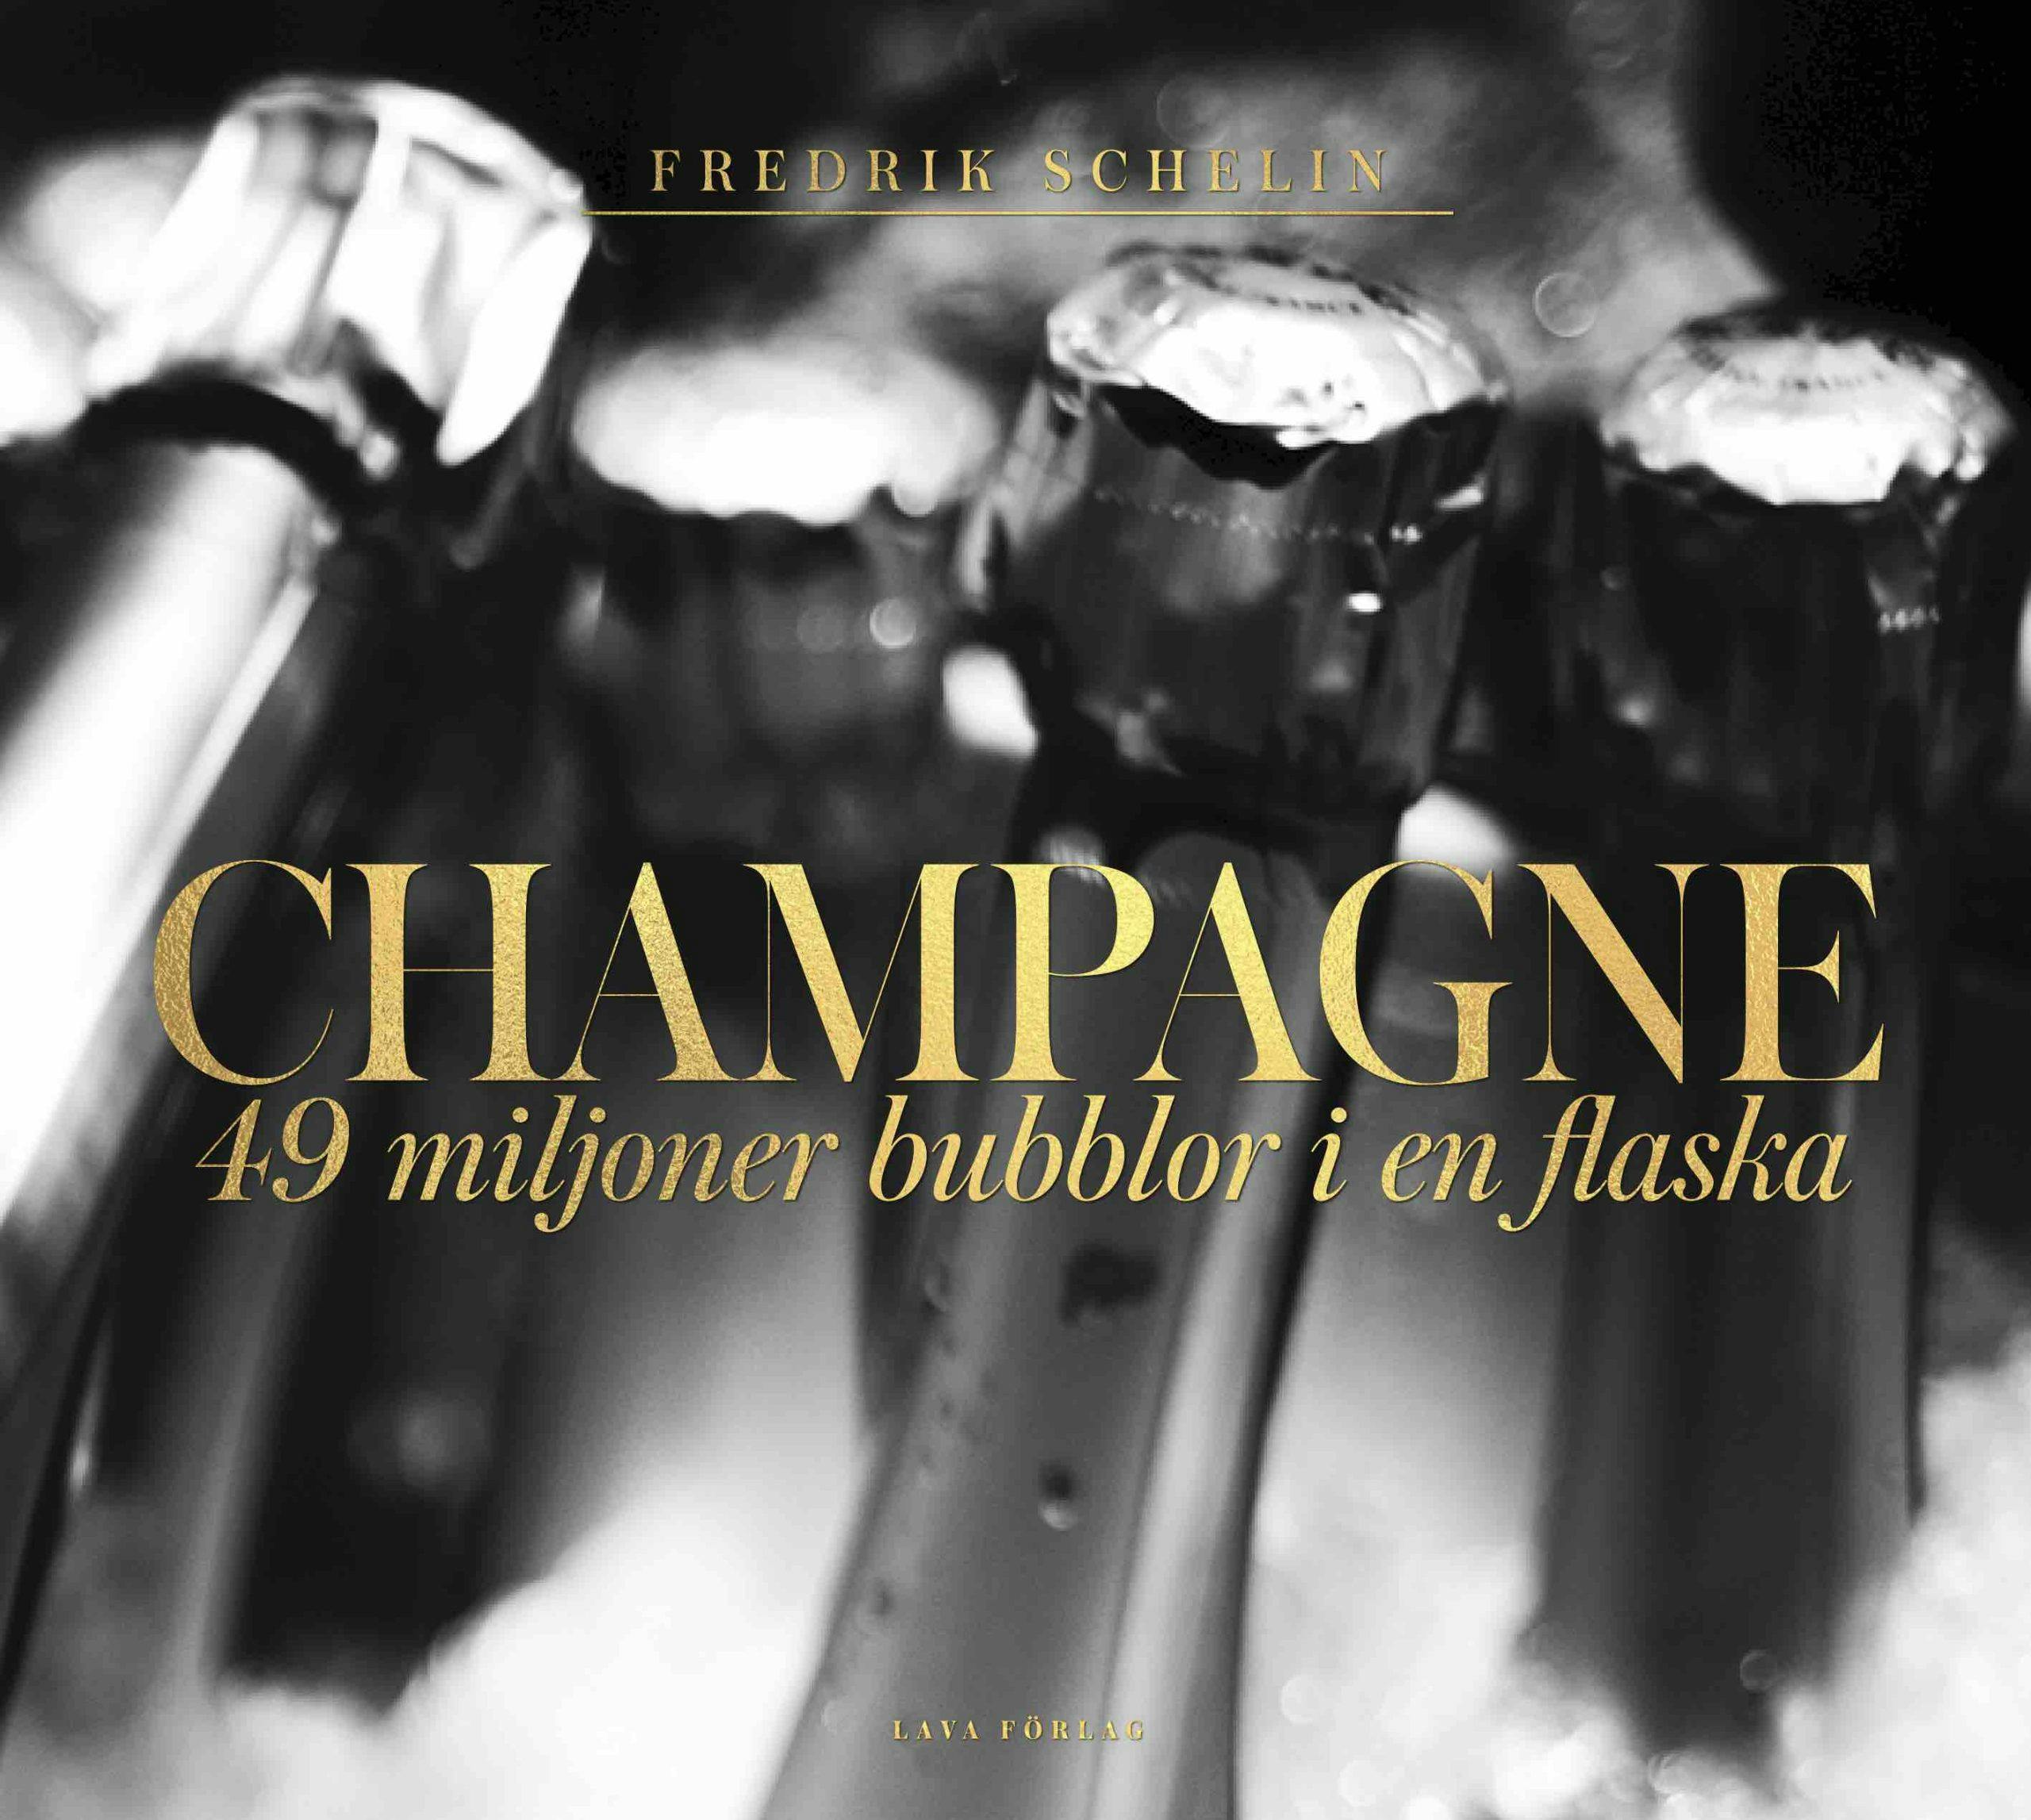 Champagne - 49 miljoner bubblor i en flaska